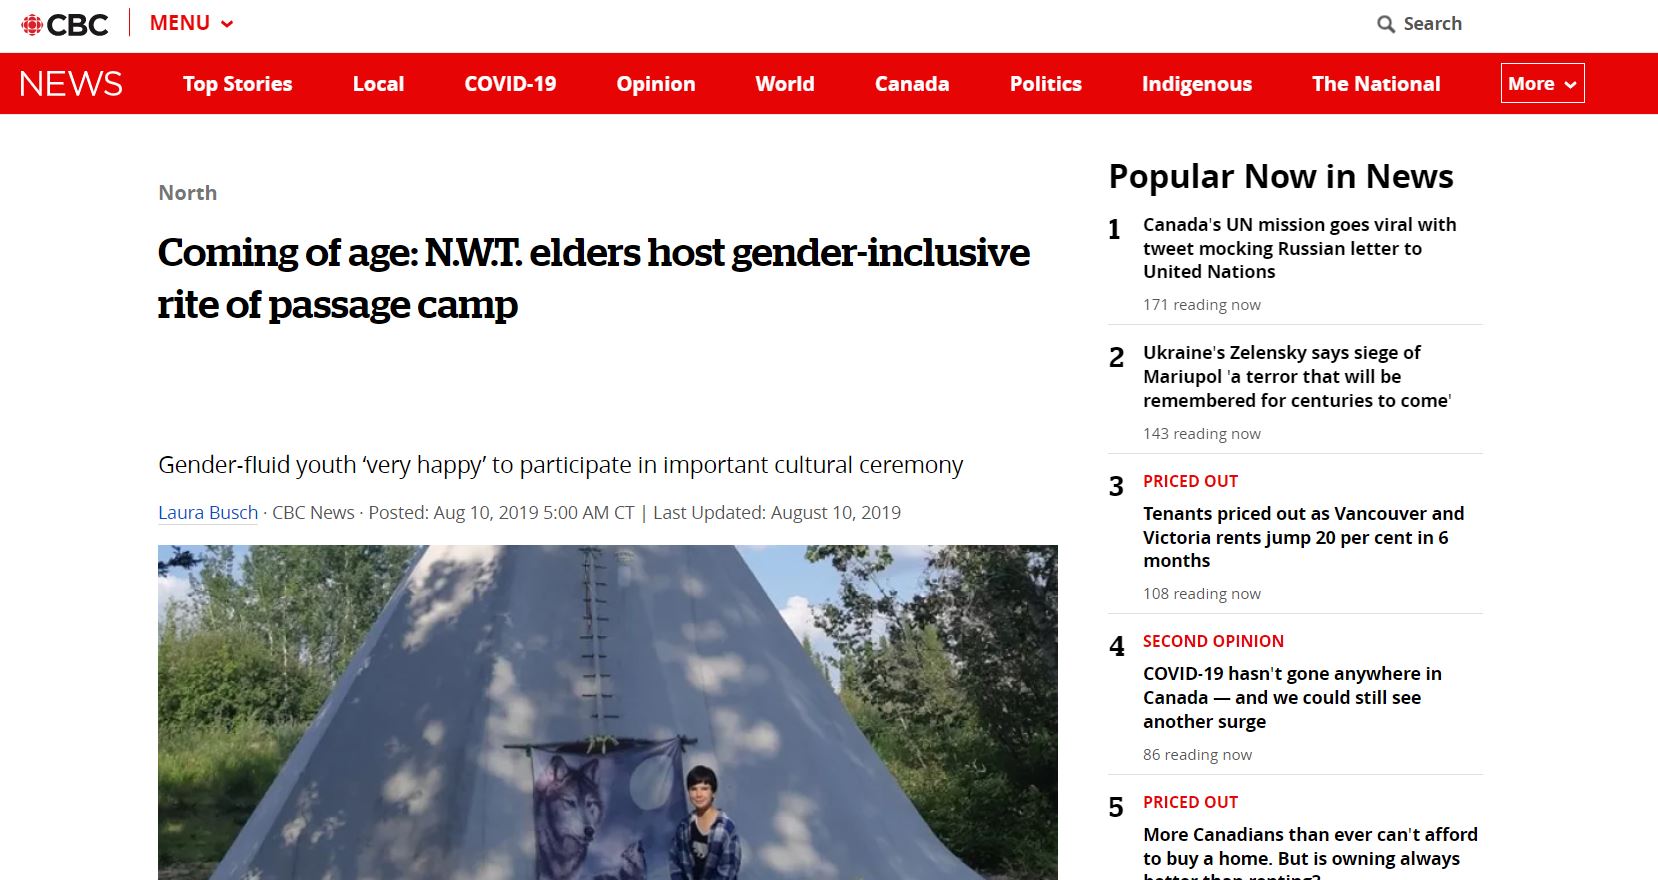 Coming of age: N.W.T. elders host gender-inclusive rite of passage camp